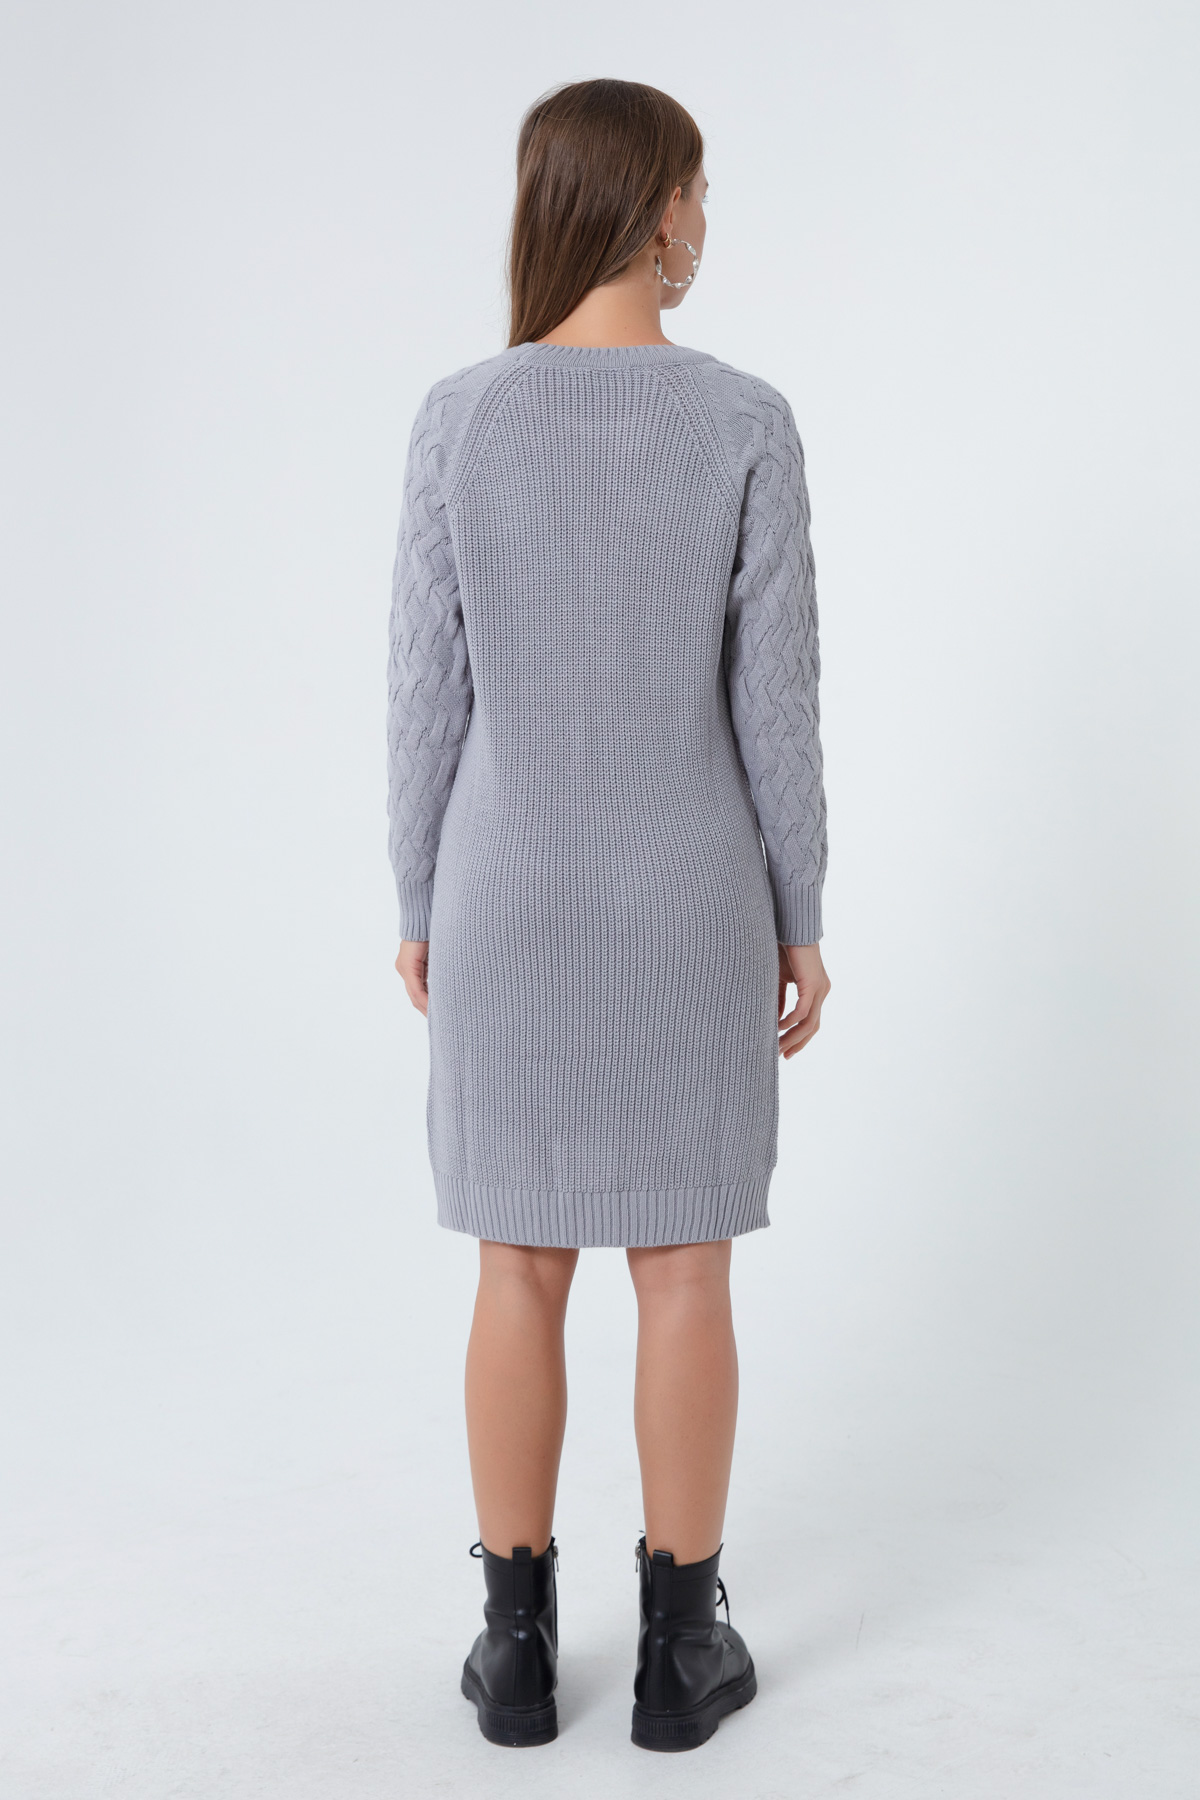 Women's Gray Italian Sleeve Dress